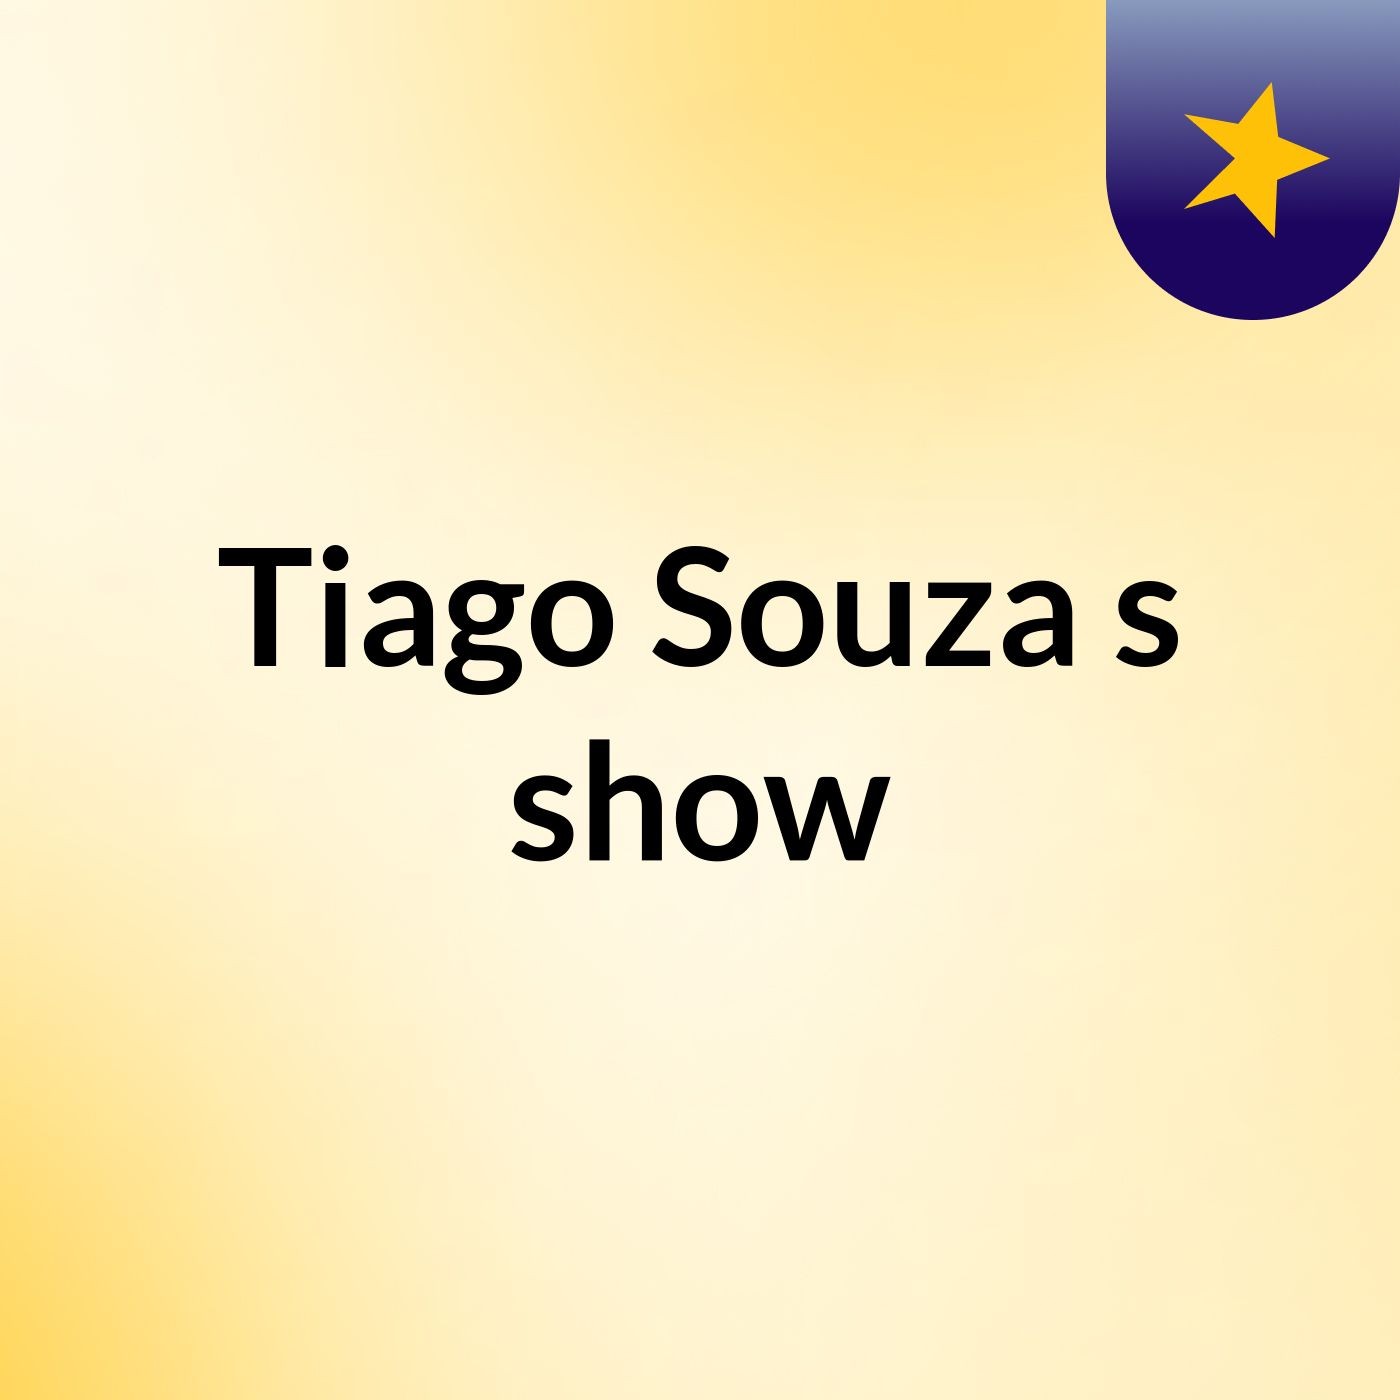 Tiago 's show